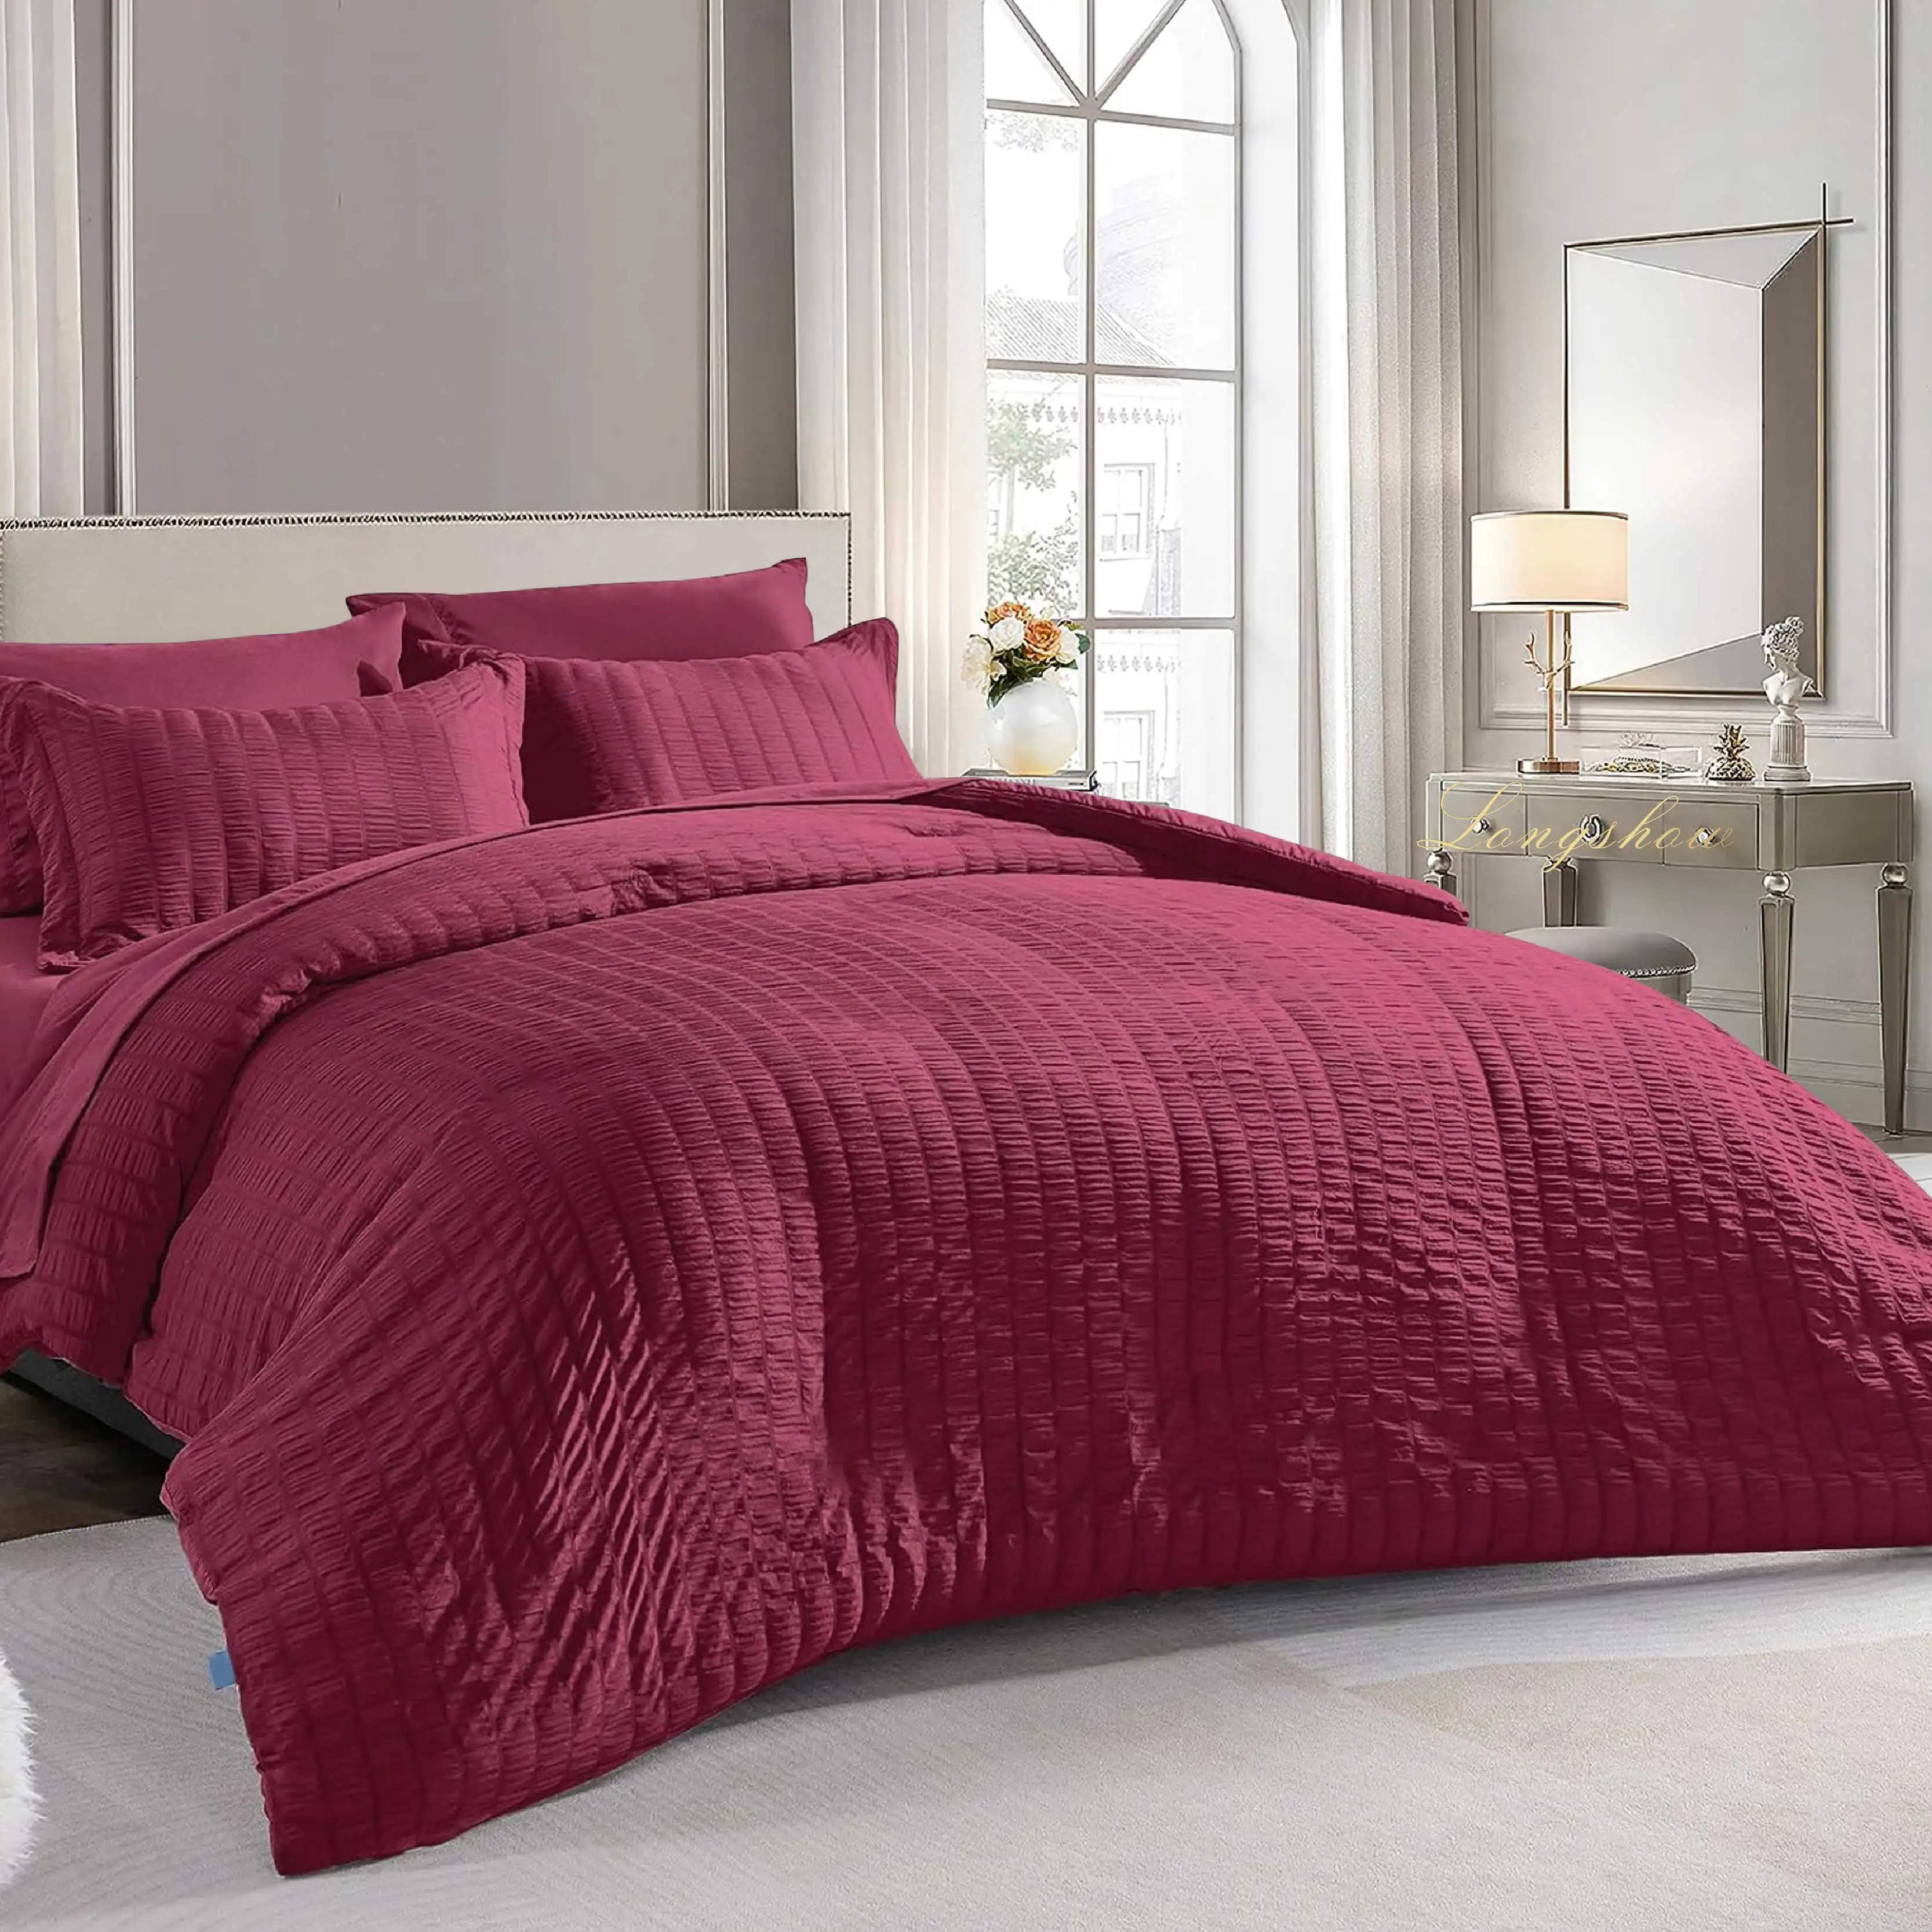 New design Seersucker queen size bedding Set 3-Pieces All Season duvet cover with pillow sham